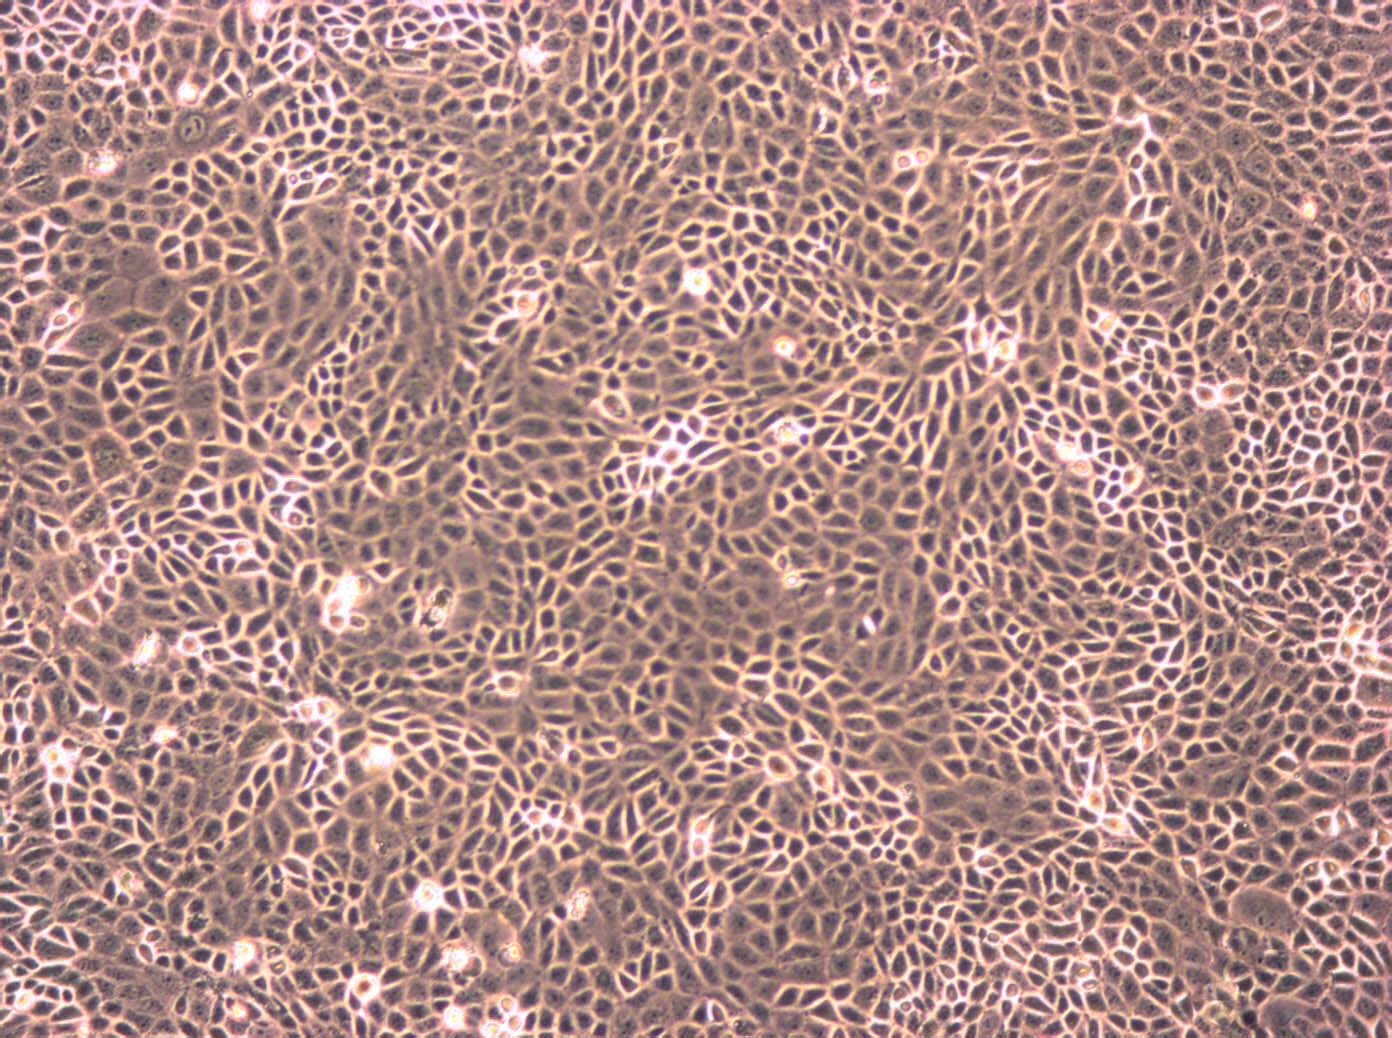 SCC-9 epithelioid cells人类鳞状上皮舌癌细胞系,SCC-9 epithelioid cells